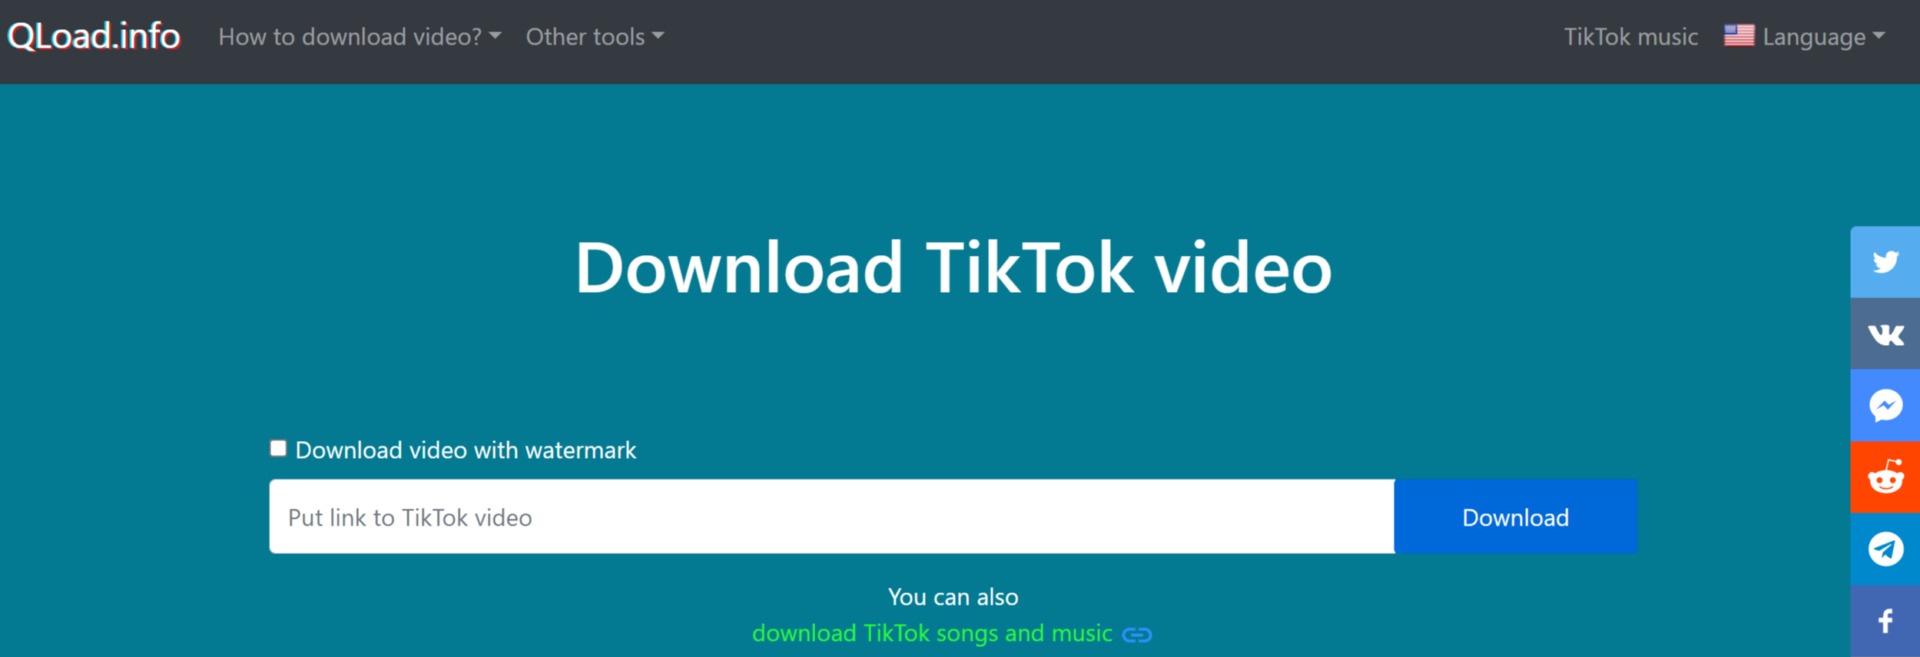 Free TikTok Video Downloader Without Watermark